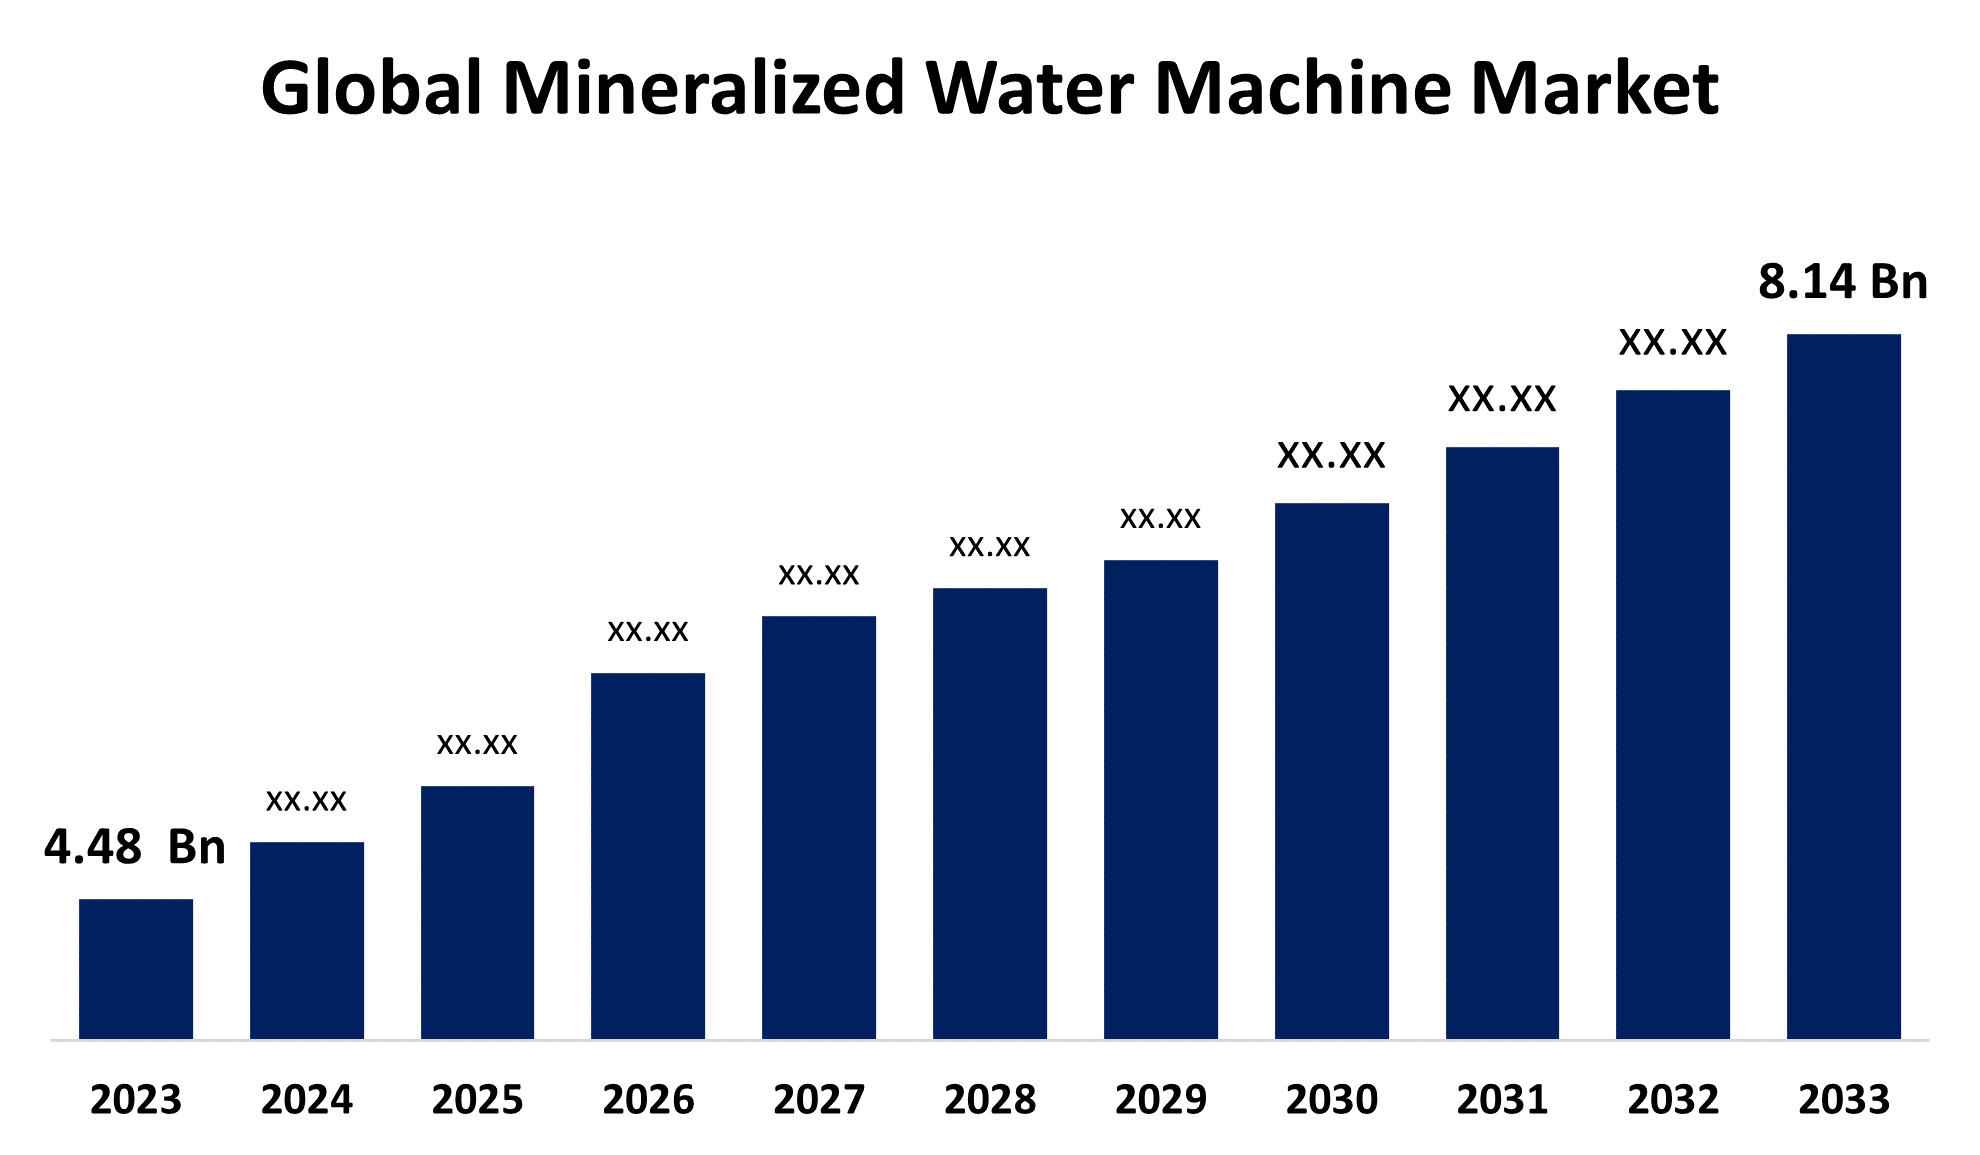 Global Mineralized Water Machine Market